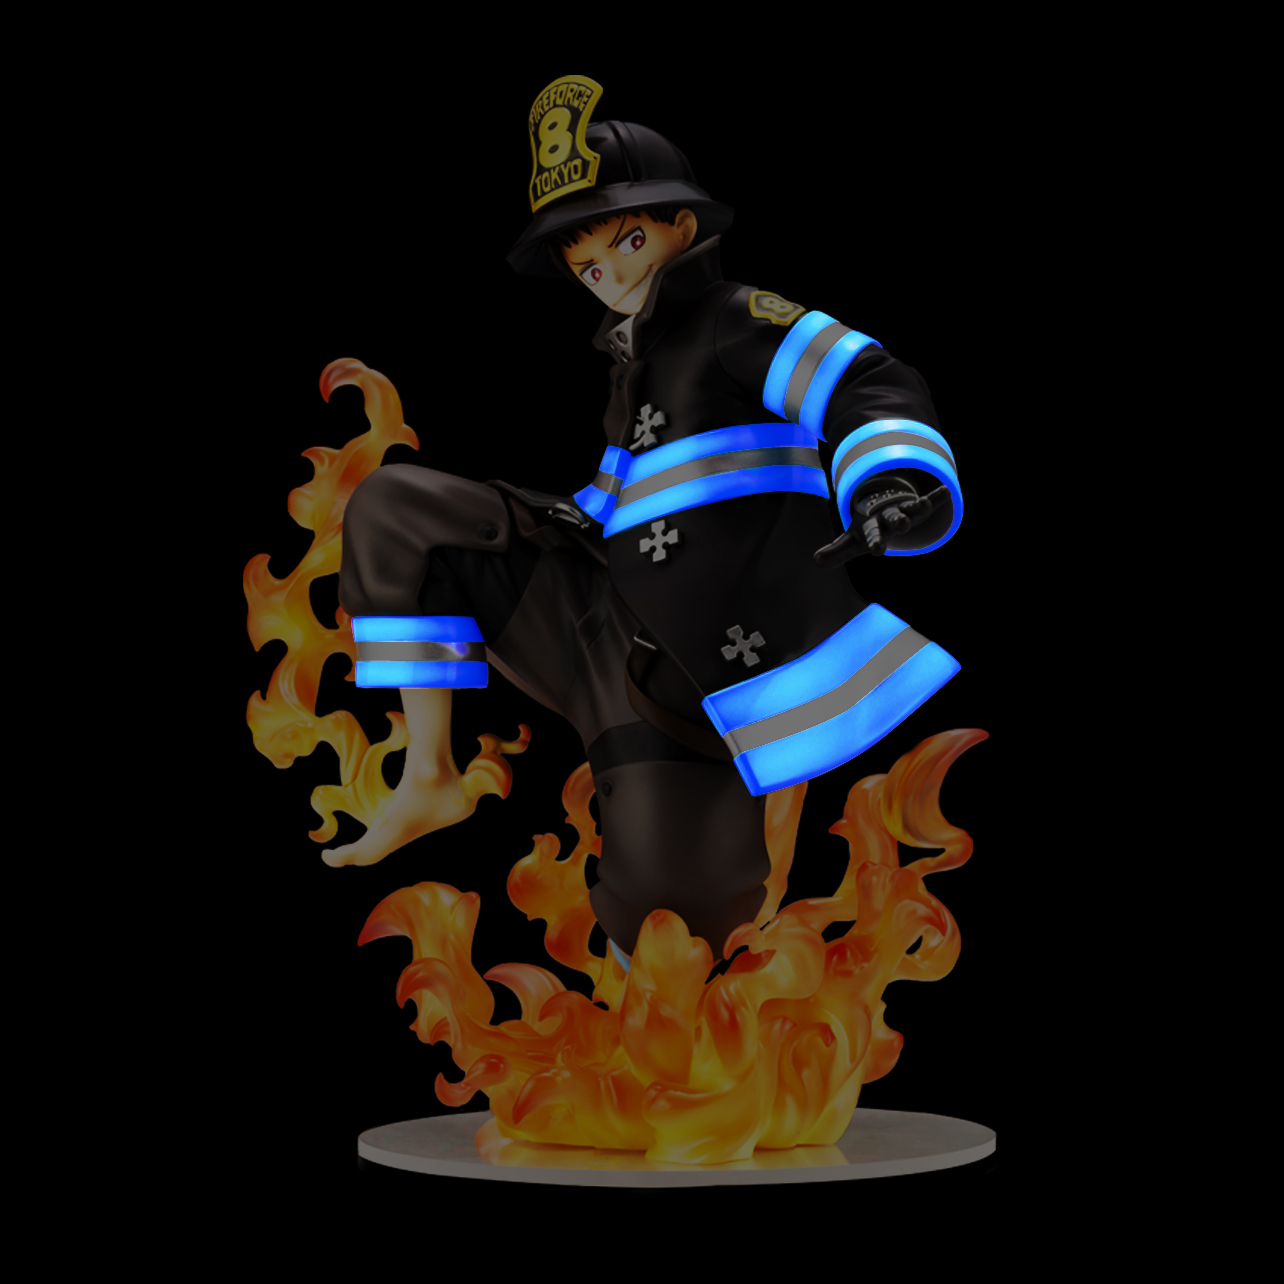 Fire Force Shinra Kusakabe ARTFX J Statue with Bonus